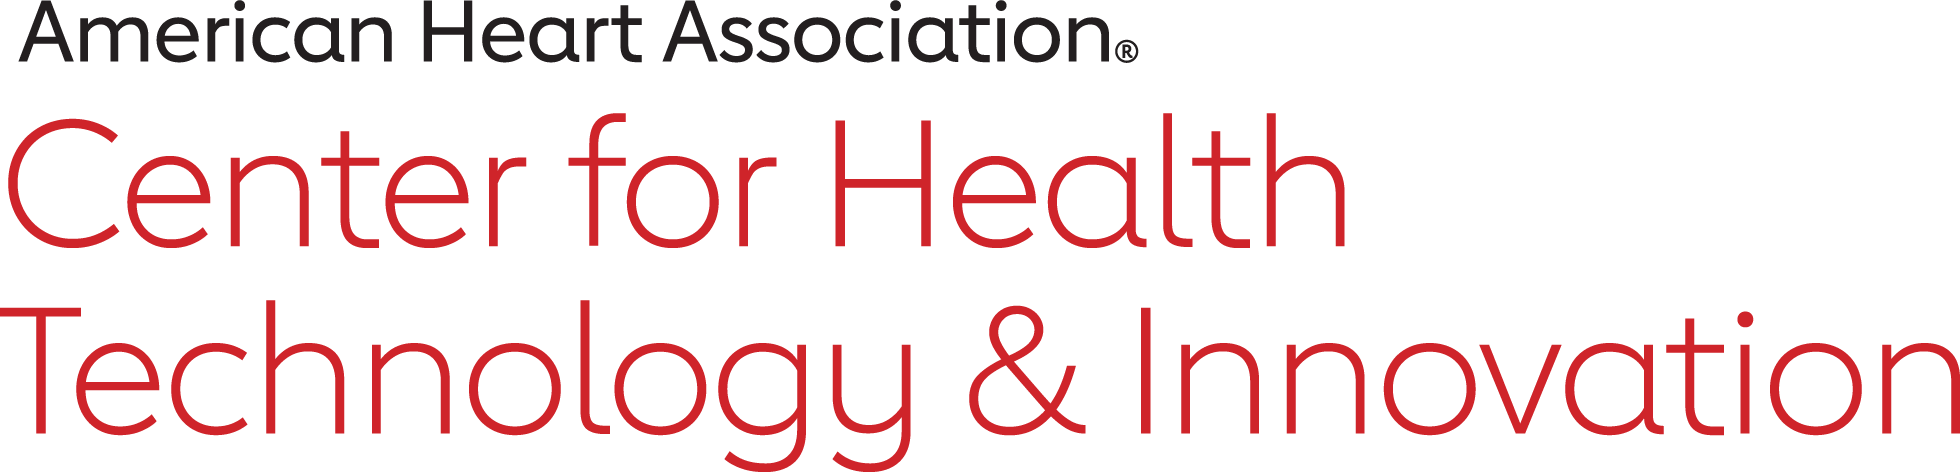 American Heart Association Center for Health Technology & Innovation